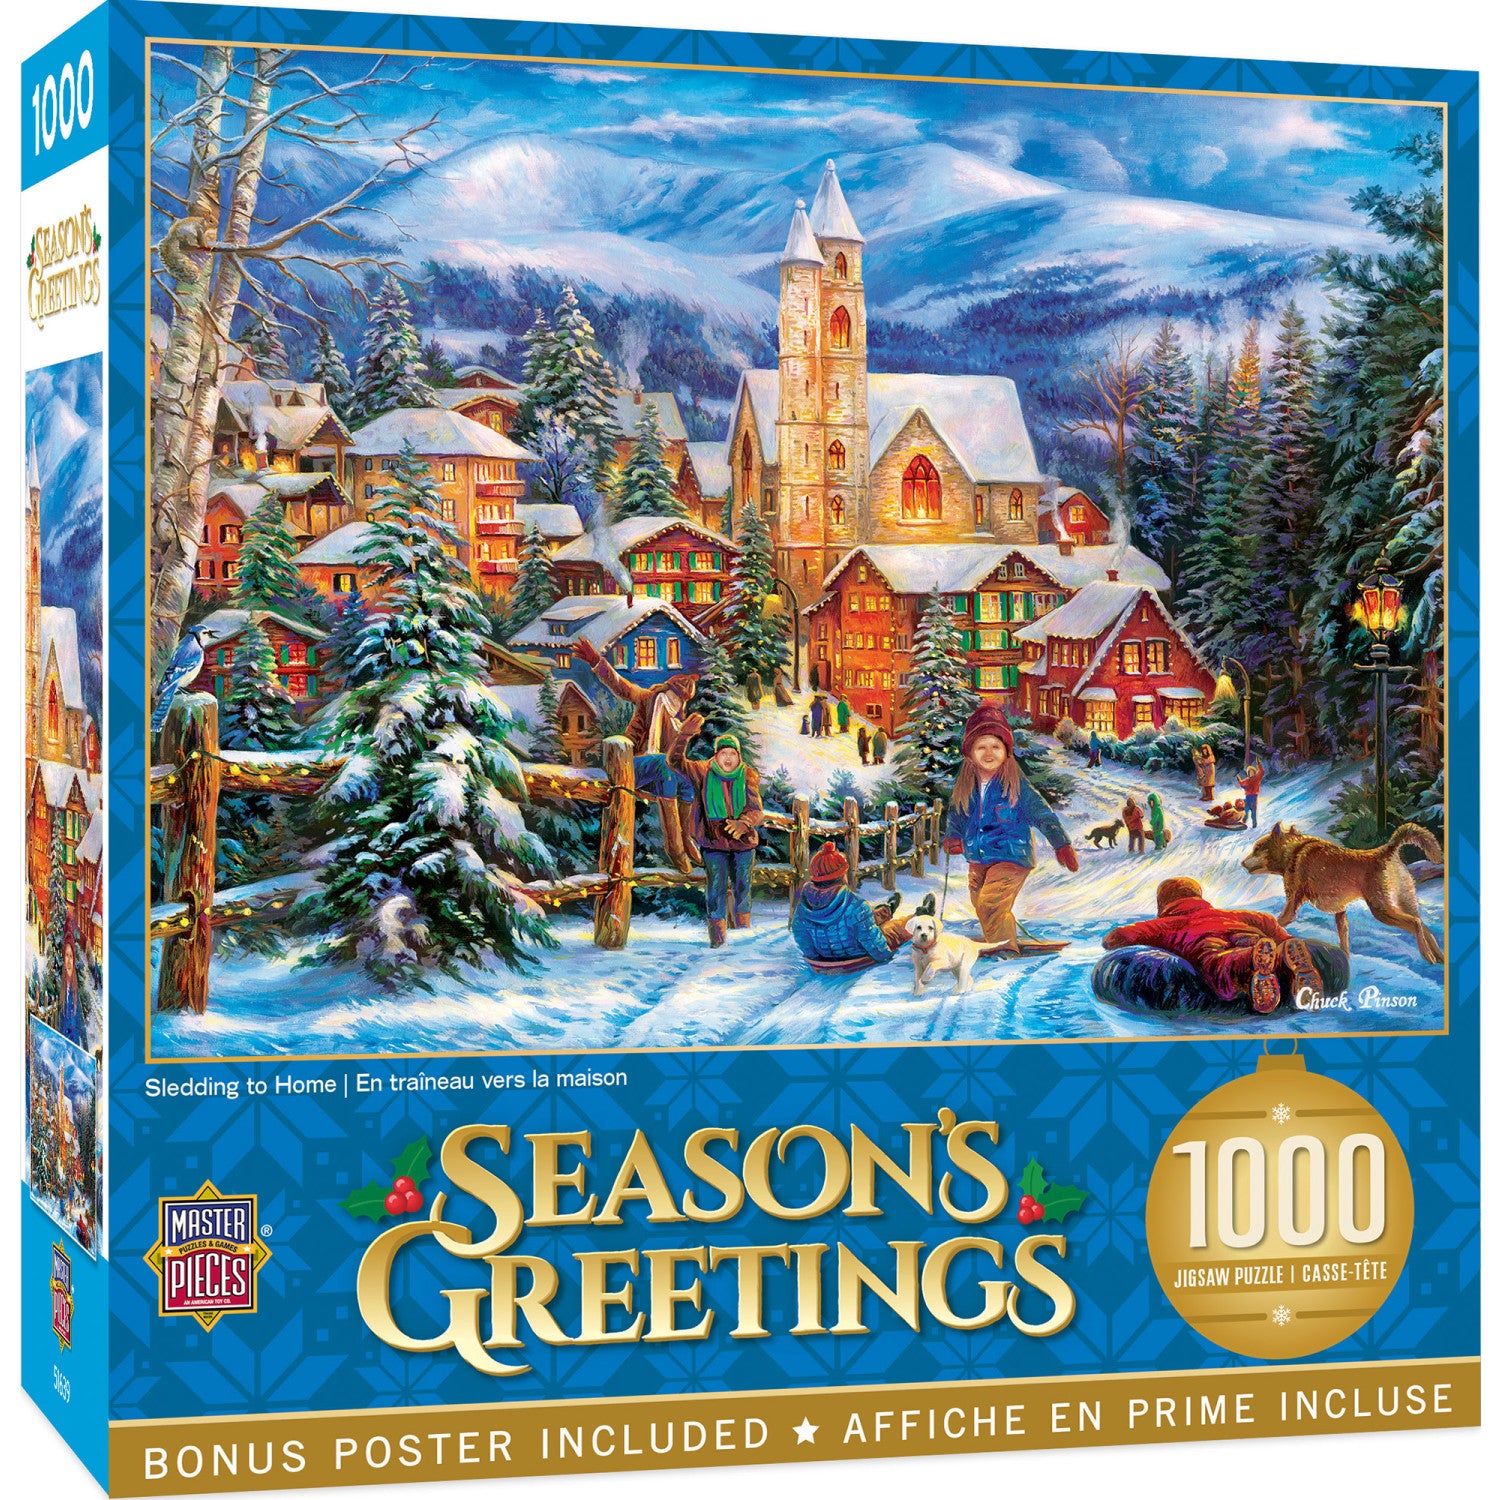 Season's Greetings - Sledding Home 1000 Piece Jigsaw Puzzle